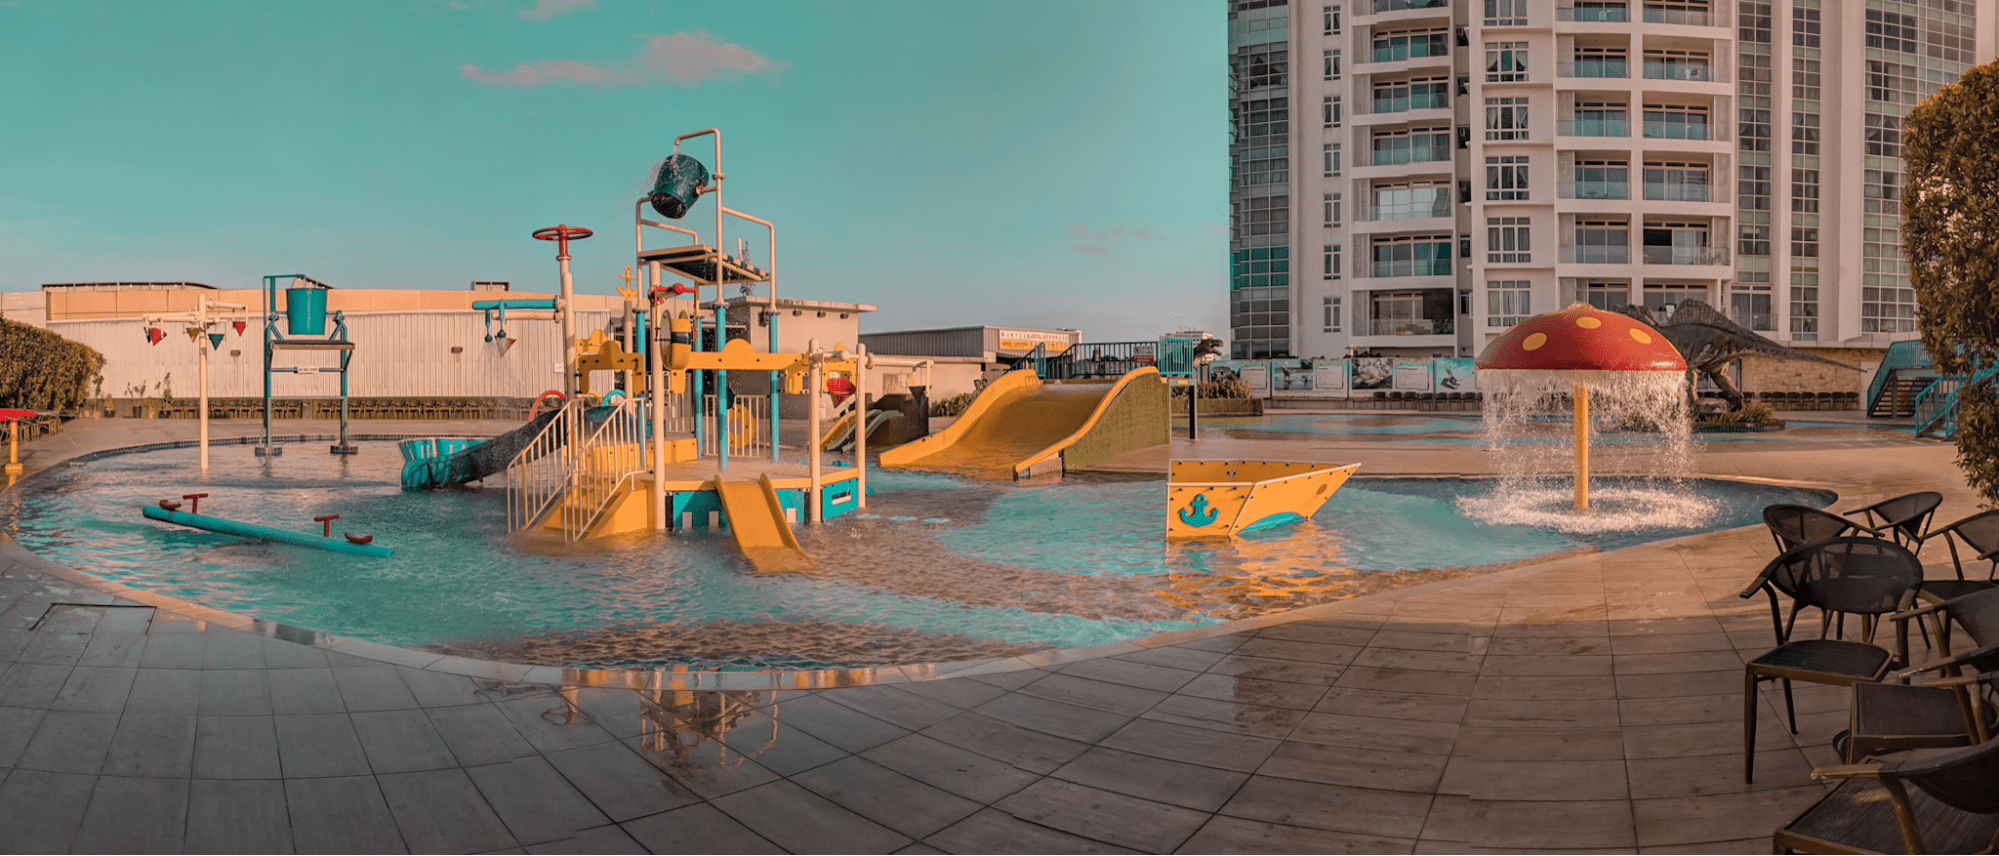 ksl city mall - Dinosaurs Alive Water Theme Park